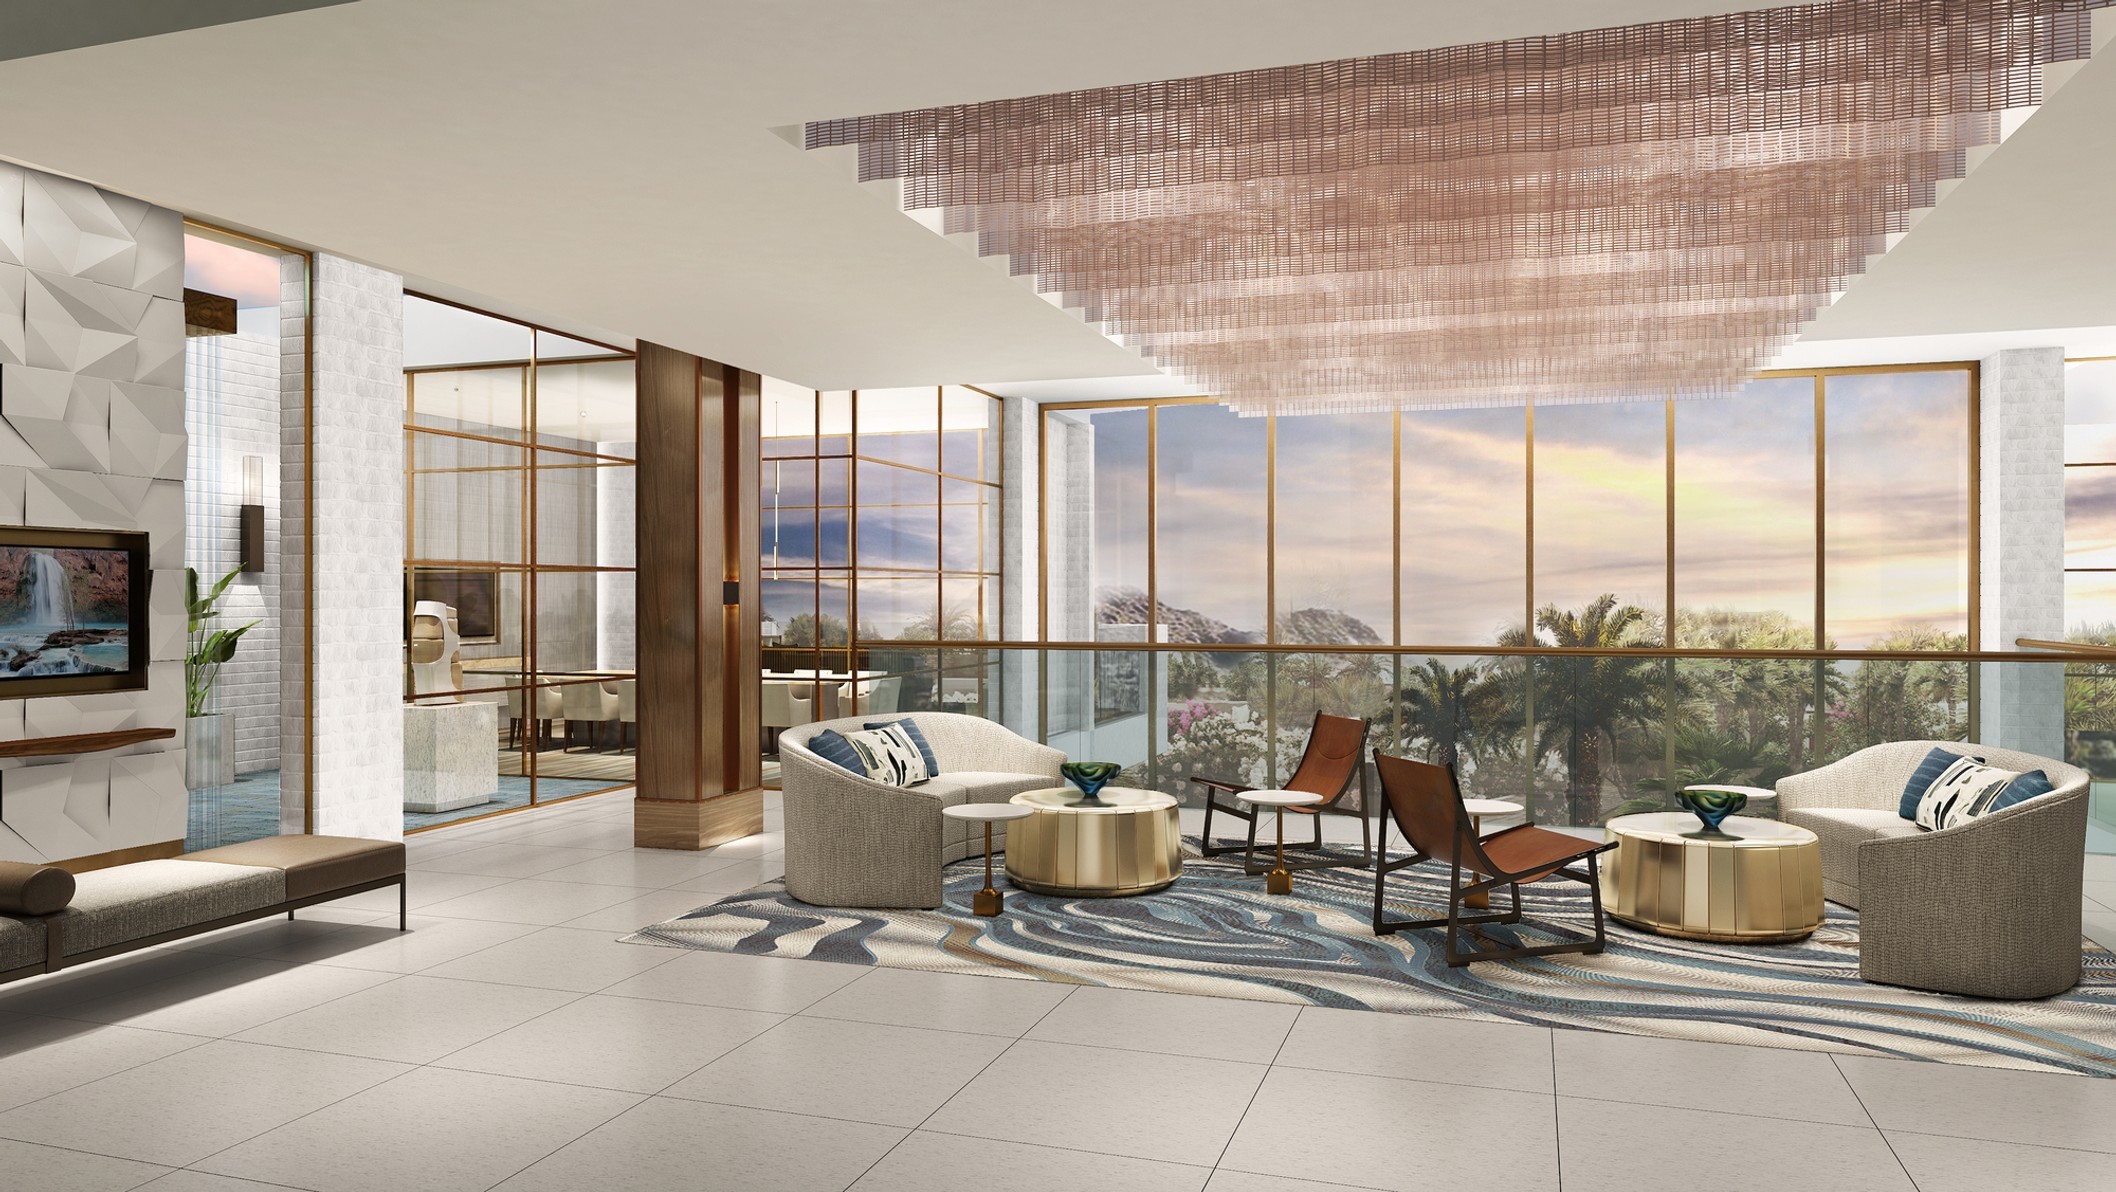 Photo of The Ritz-Carlton Residences, Paradise Valley, Paradise Valley, AZ